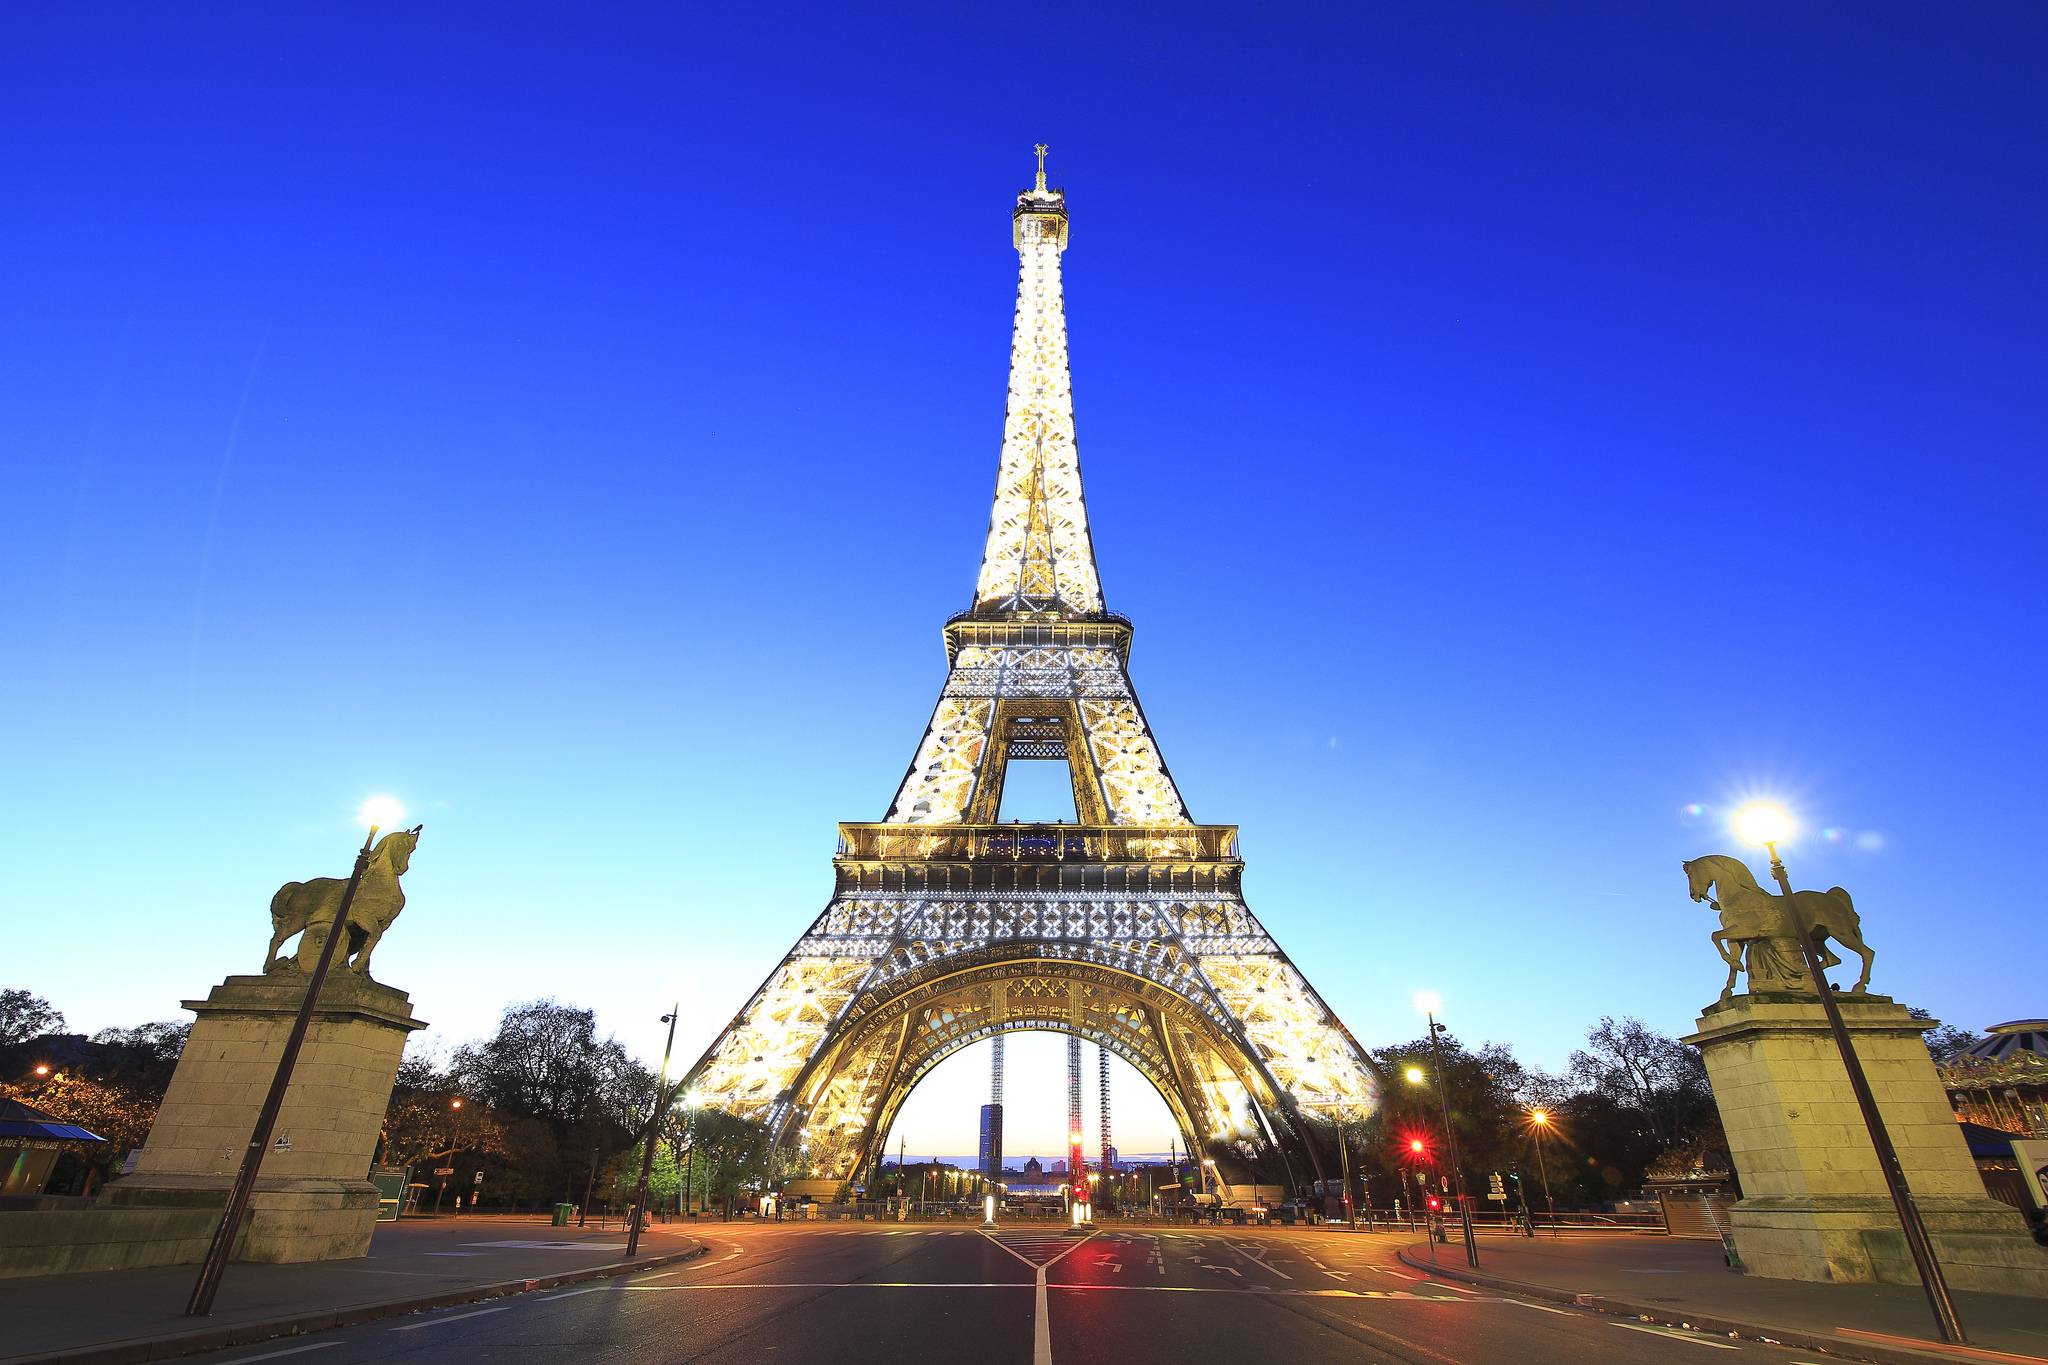 Paris france. Франция Париж Эйфелева башня. Башня Эйфеля в Париже. Эйфелева башня. Г. А. Эйфель. Эльфийская башня в Париже.